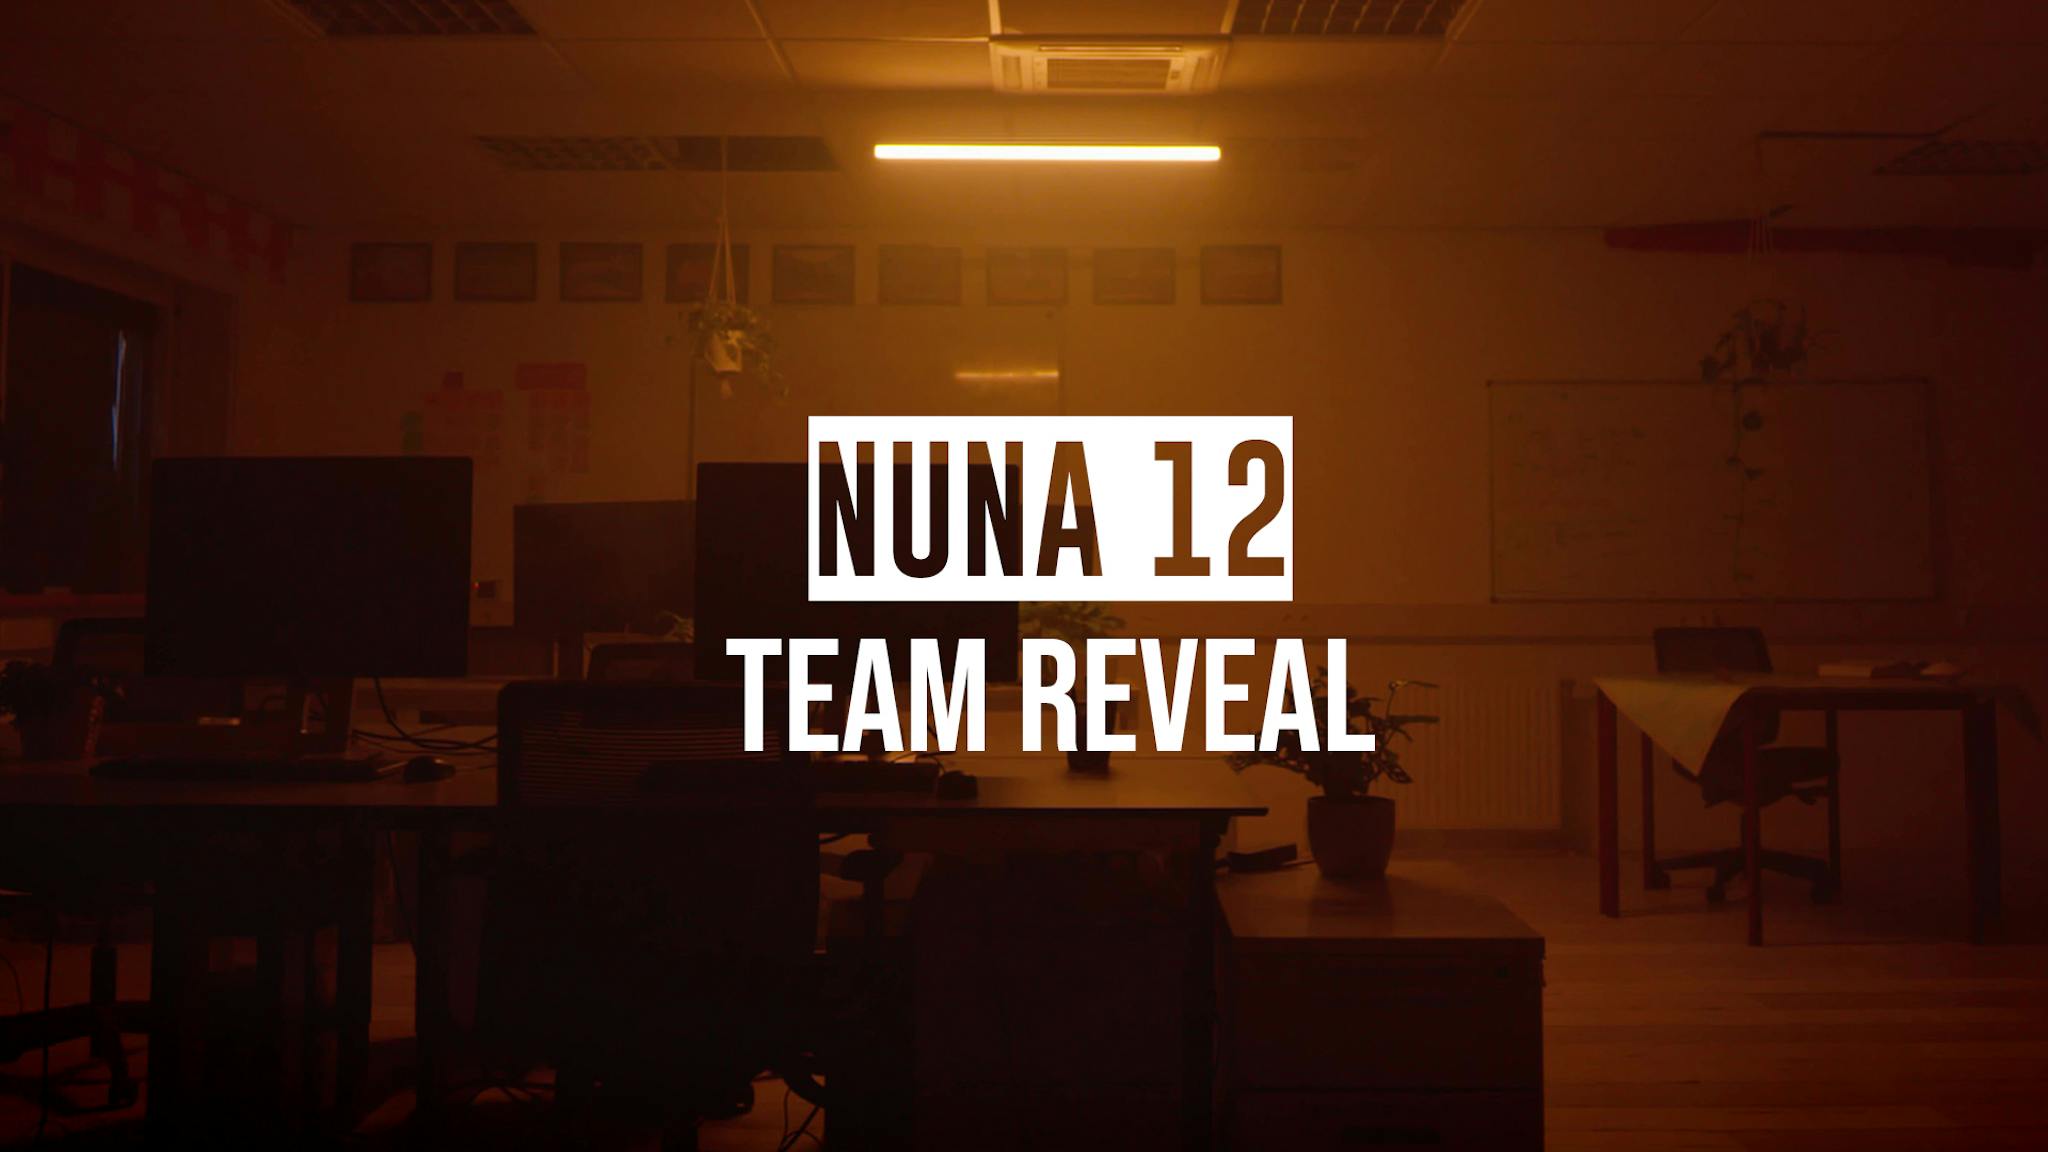 Meet the new team Nuna 12, this is their team reveal